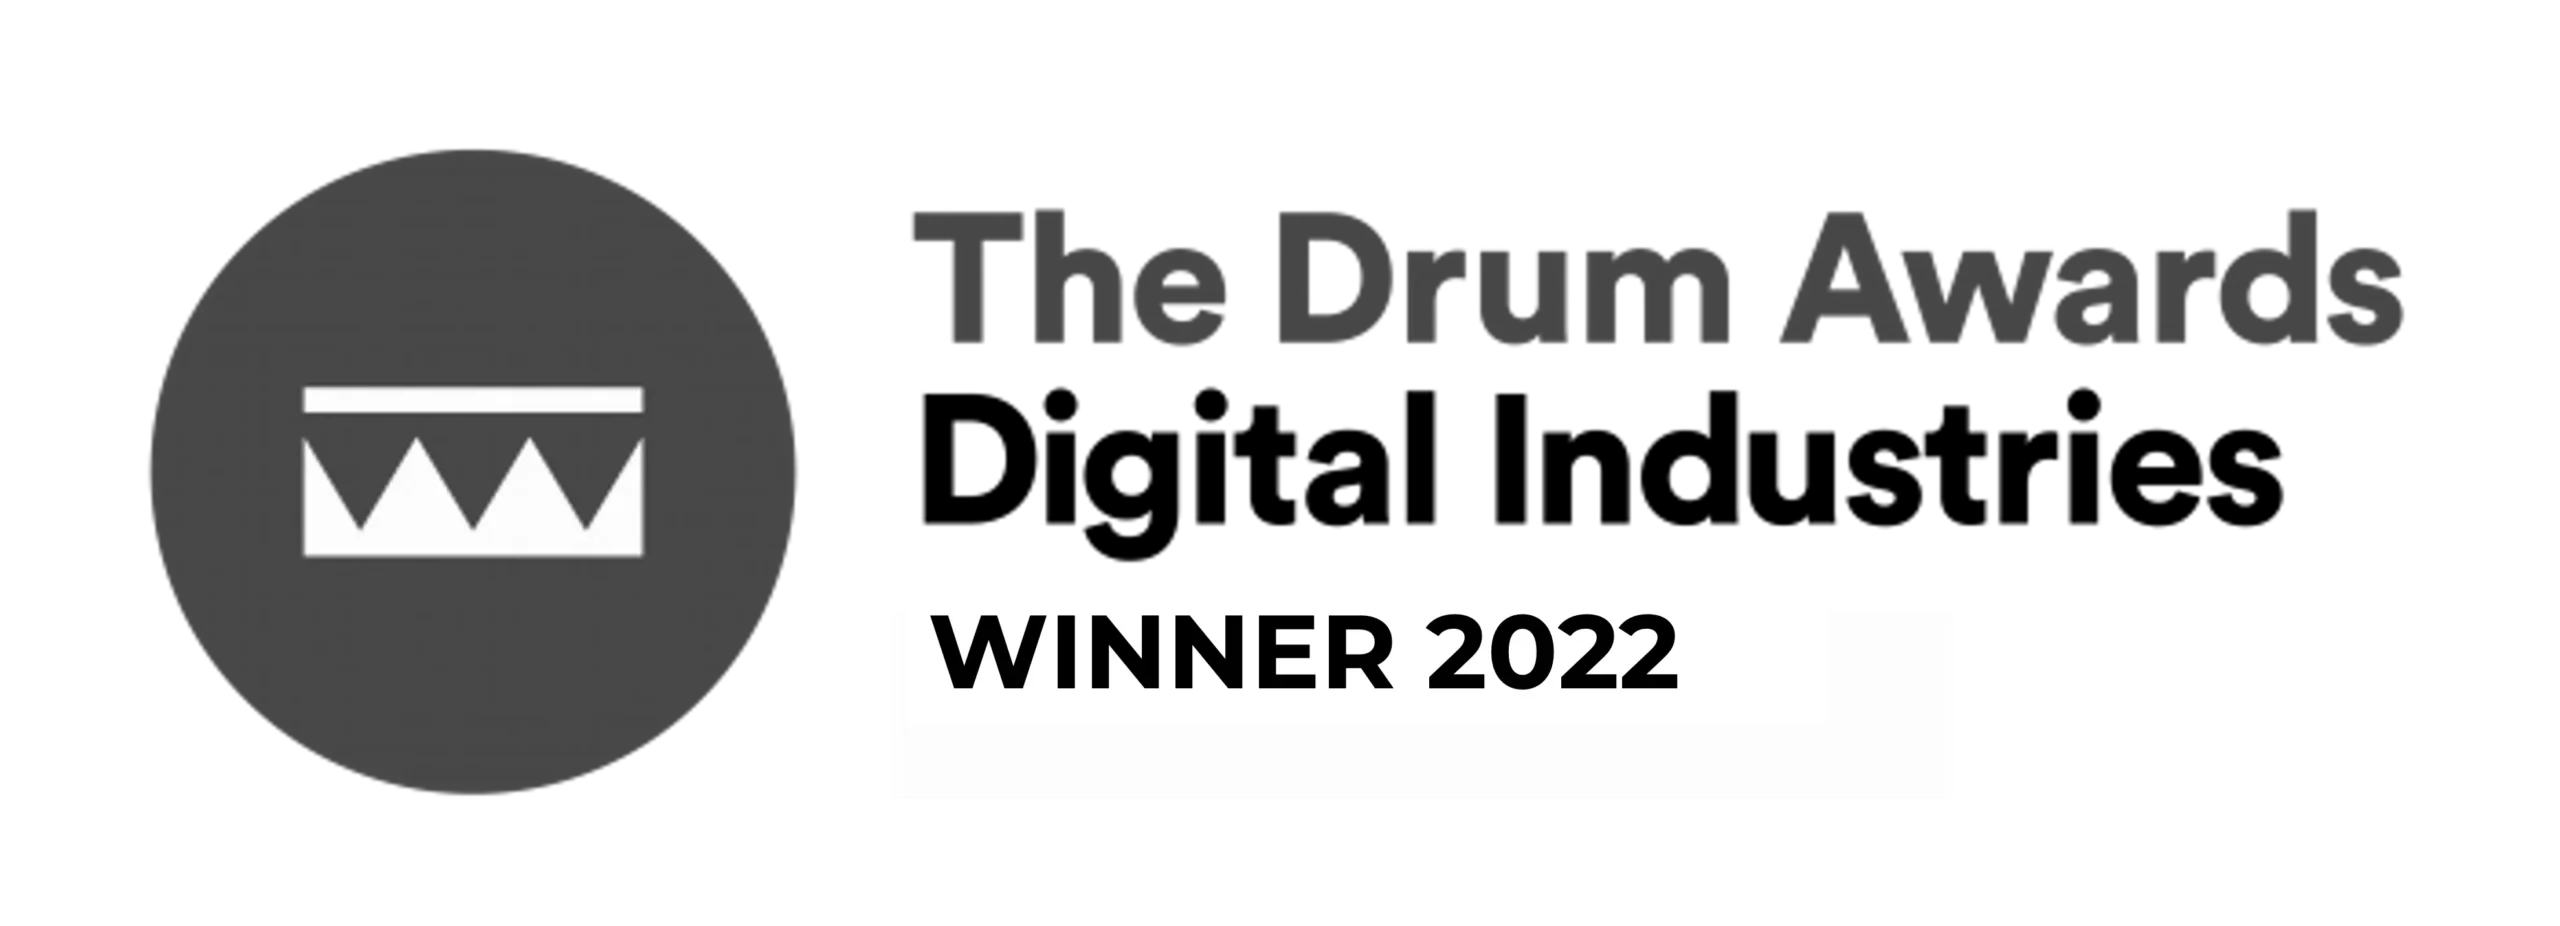 The Drum Awards for Digital Industries Winner 2022.